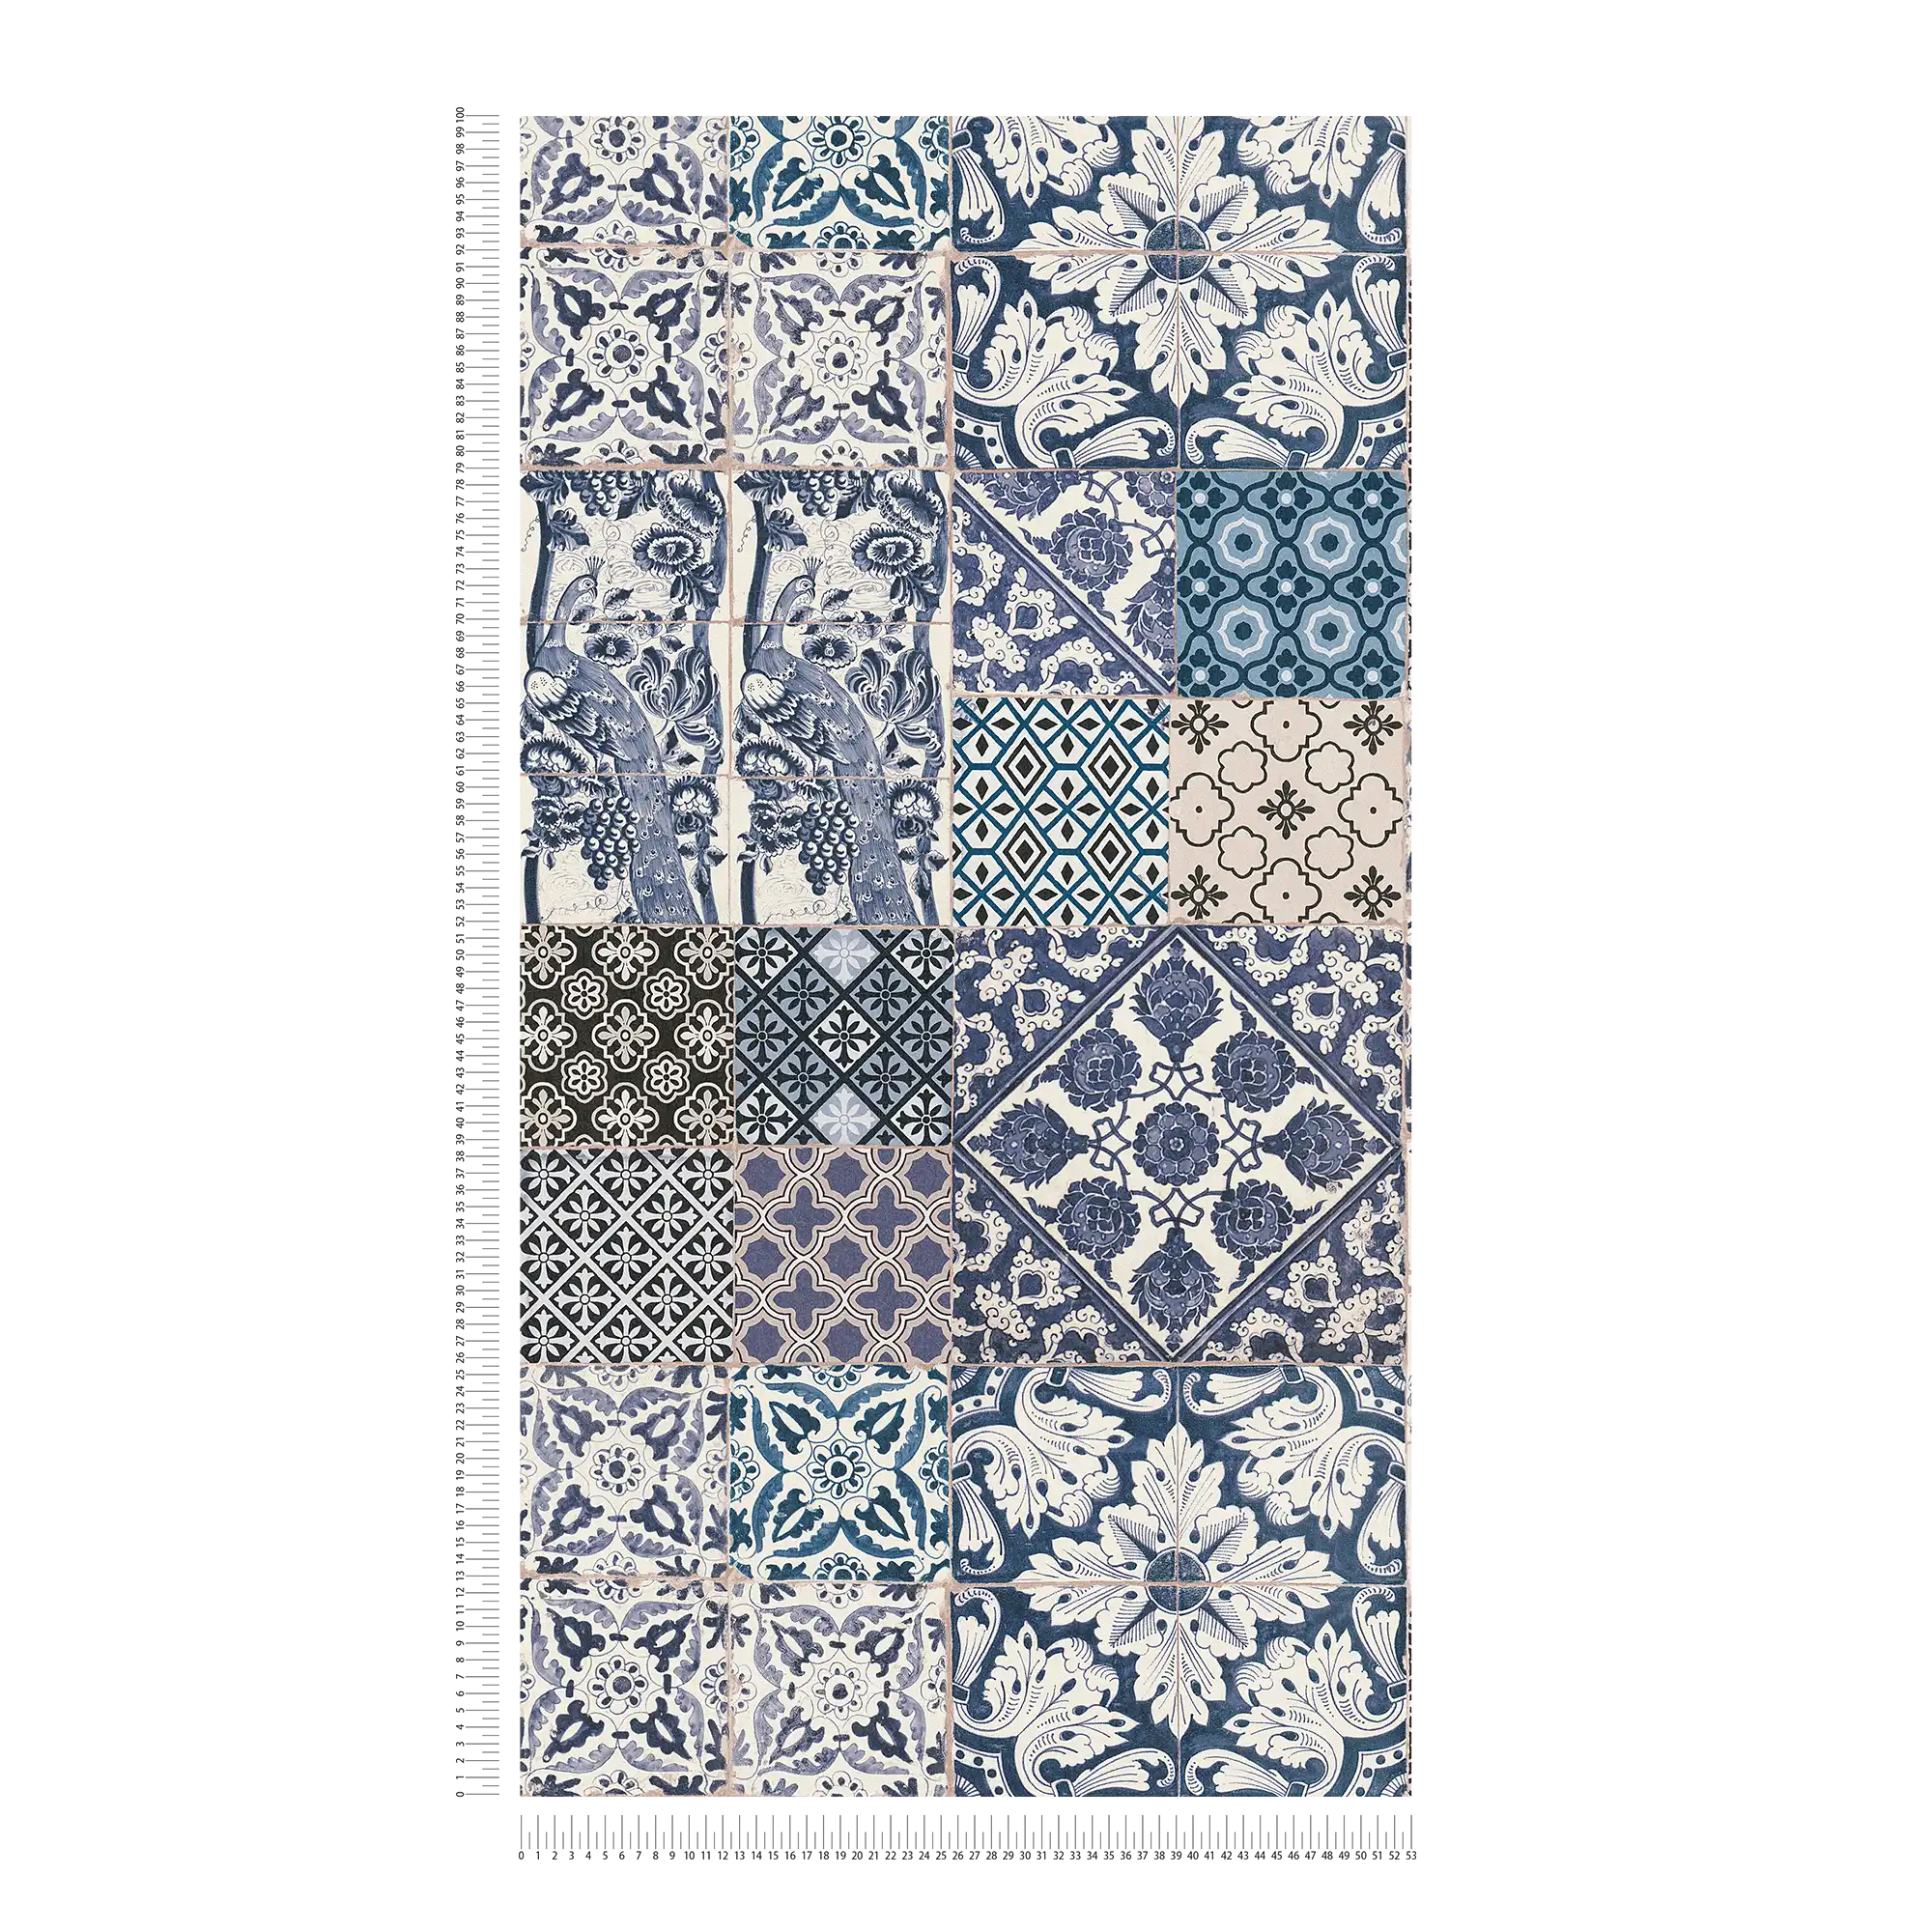             Tegels en mozaïek design behang - blauw, crème, wit
        